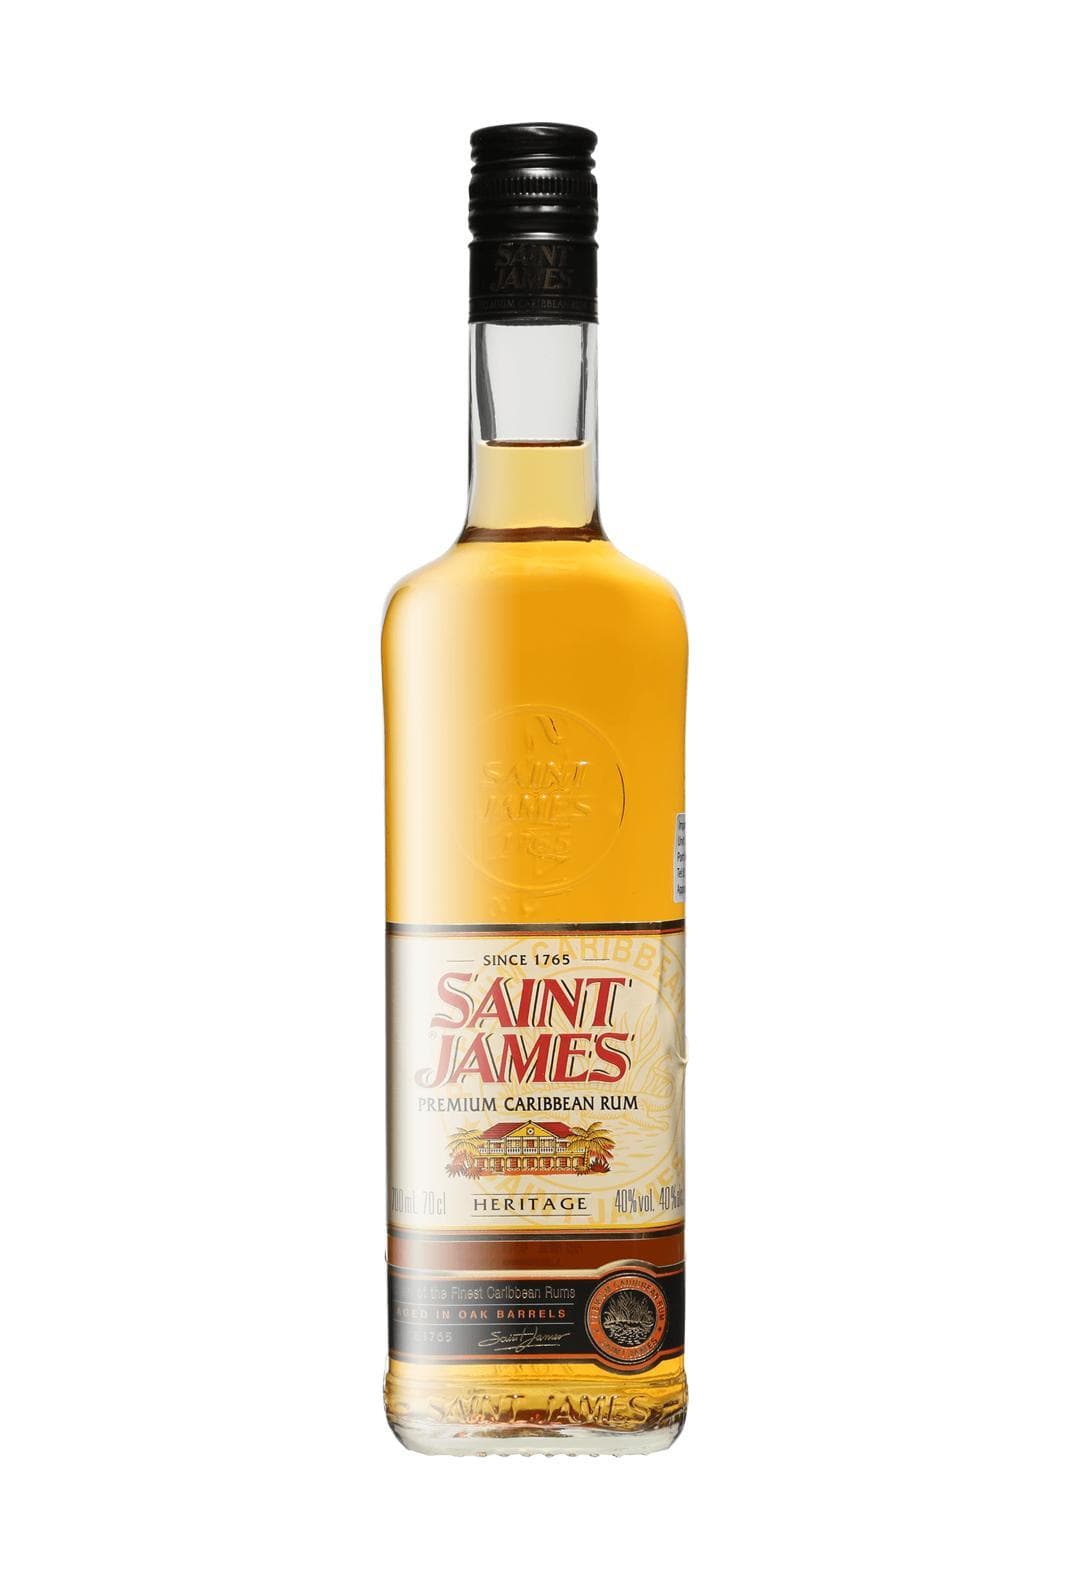 St James Rum 'Heritage' Caribbean Blend 43% 700ml | Rum | Shop online at Spirits of France